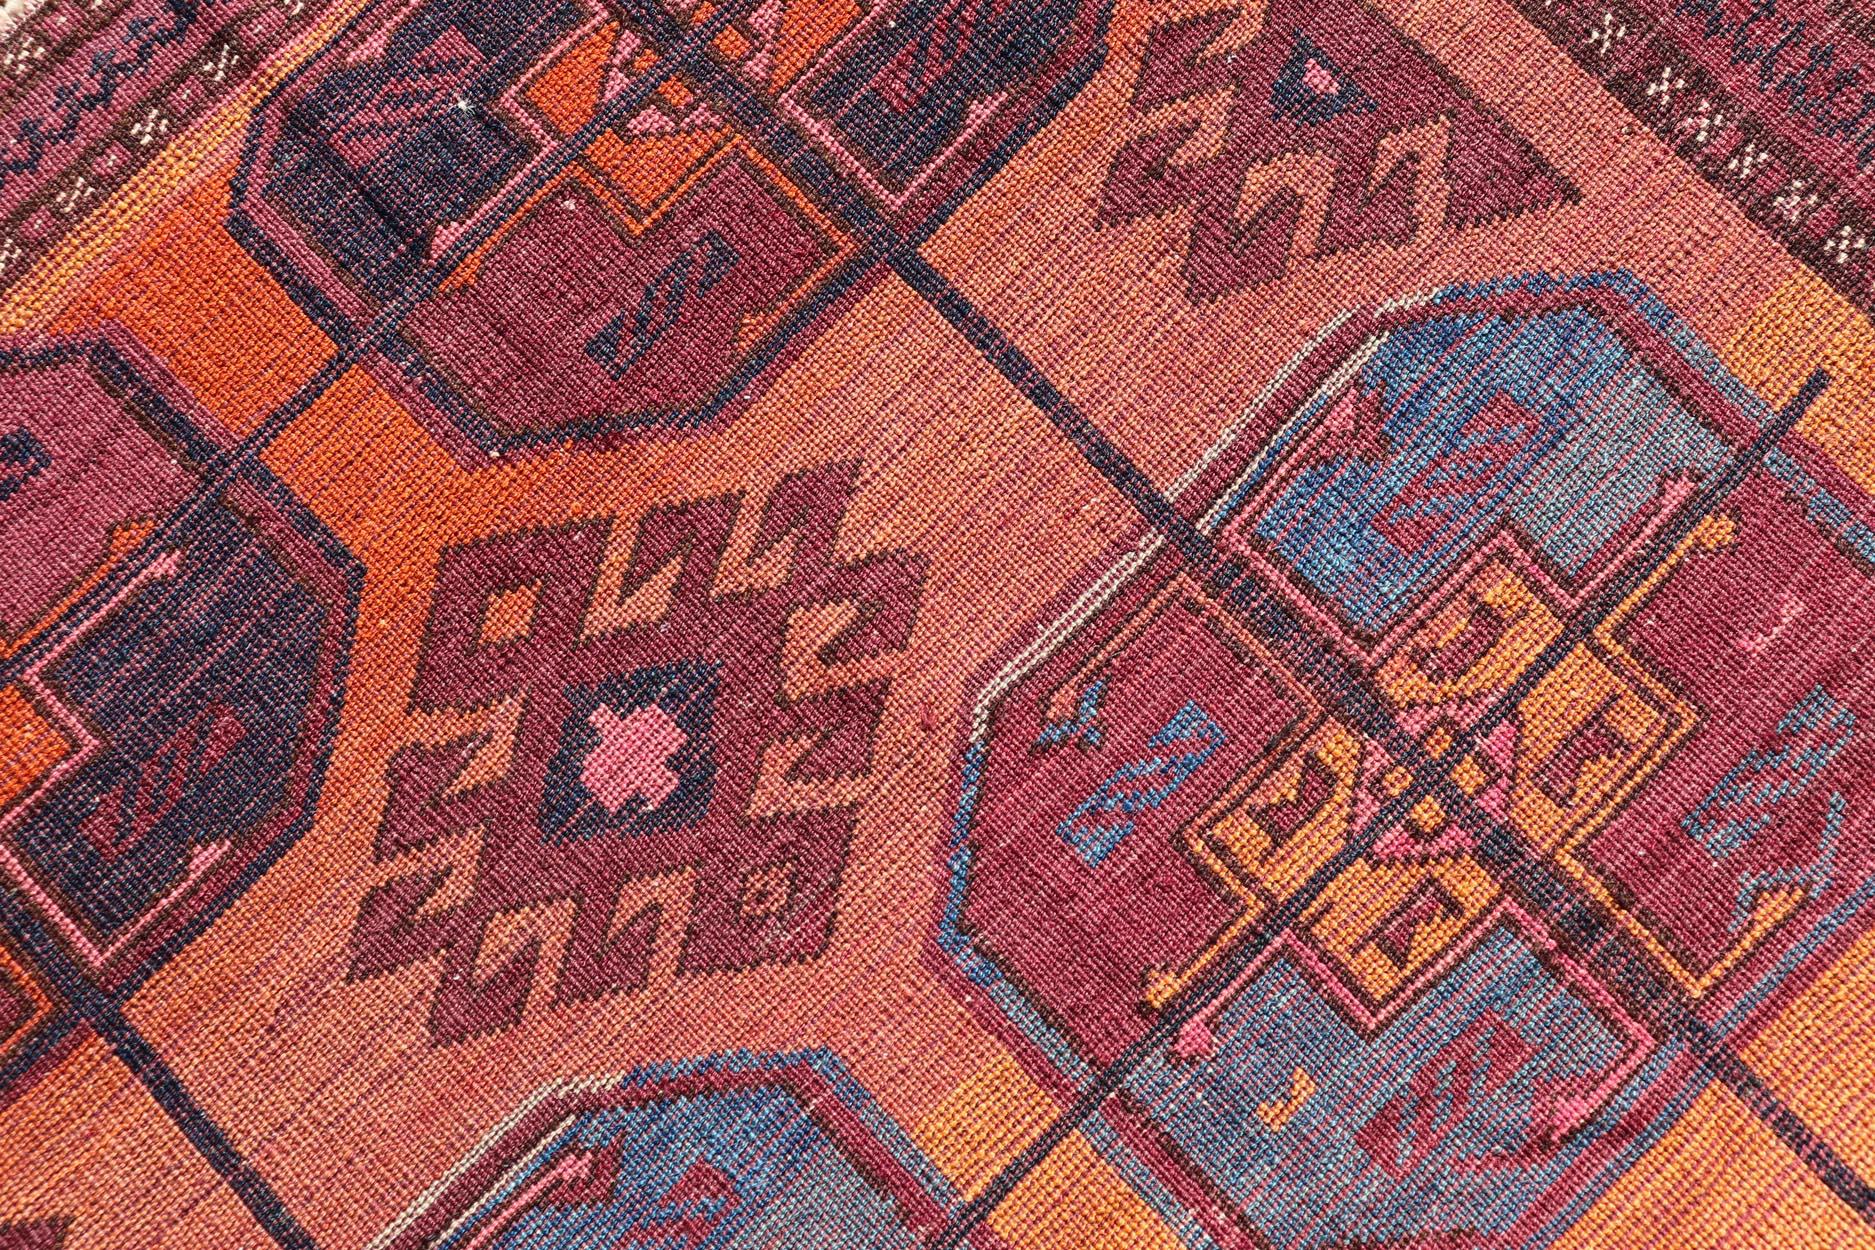 Vintage Wool Ersari Rug in Wool with Gul Design in Orange, Blue, and Brown For Sale 4